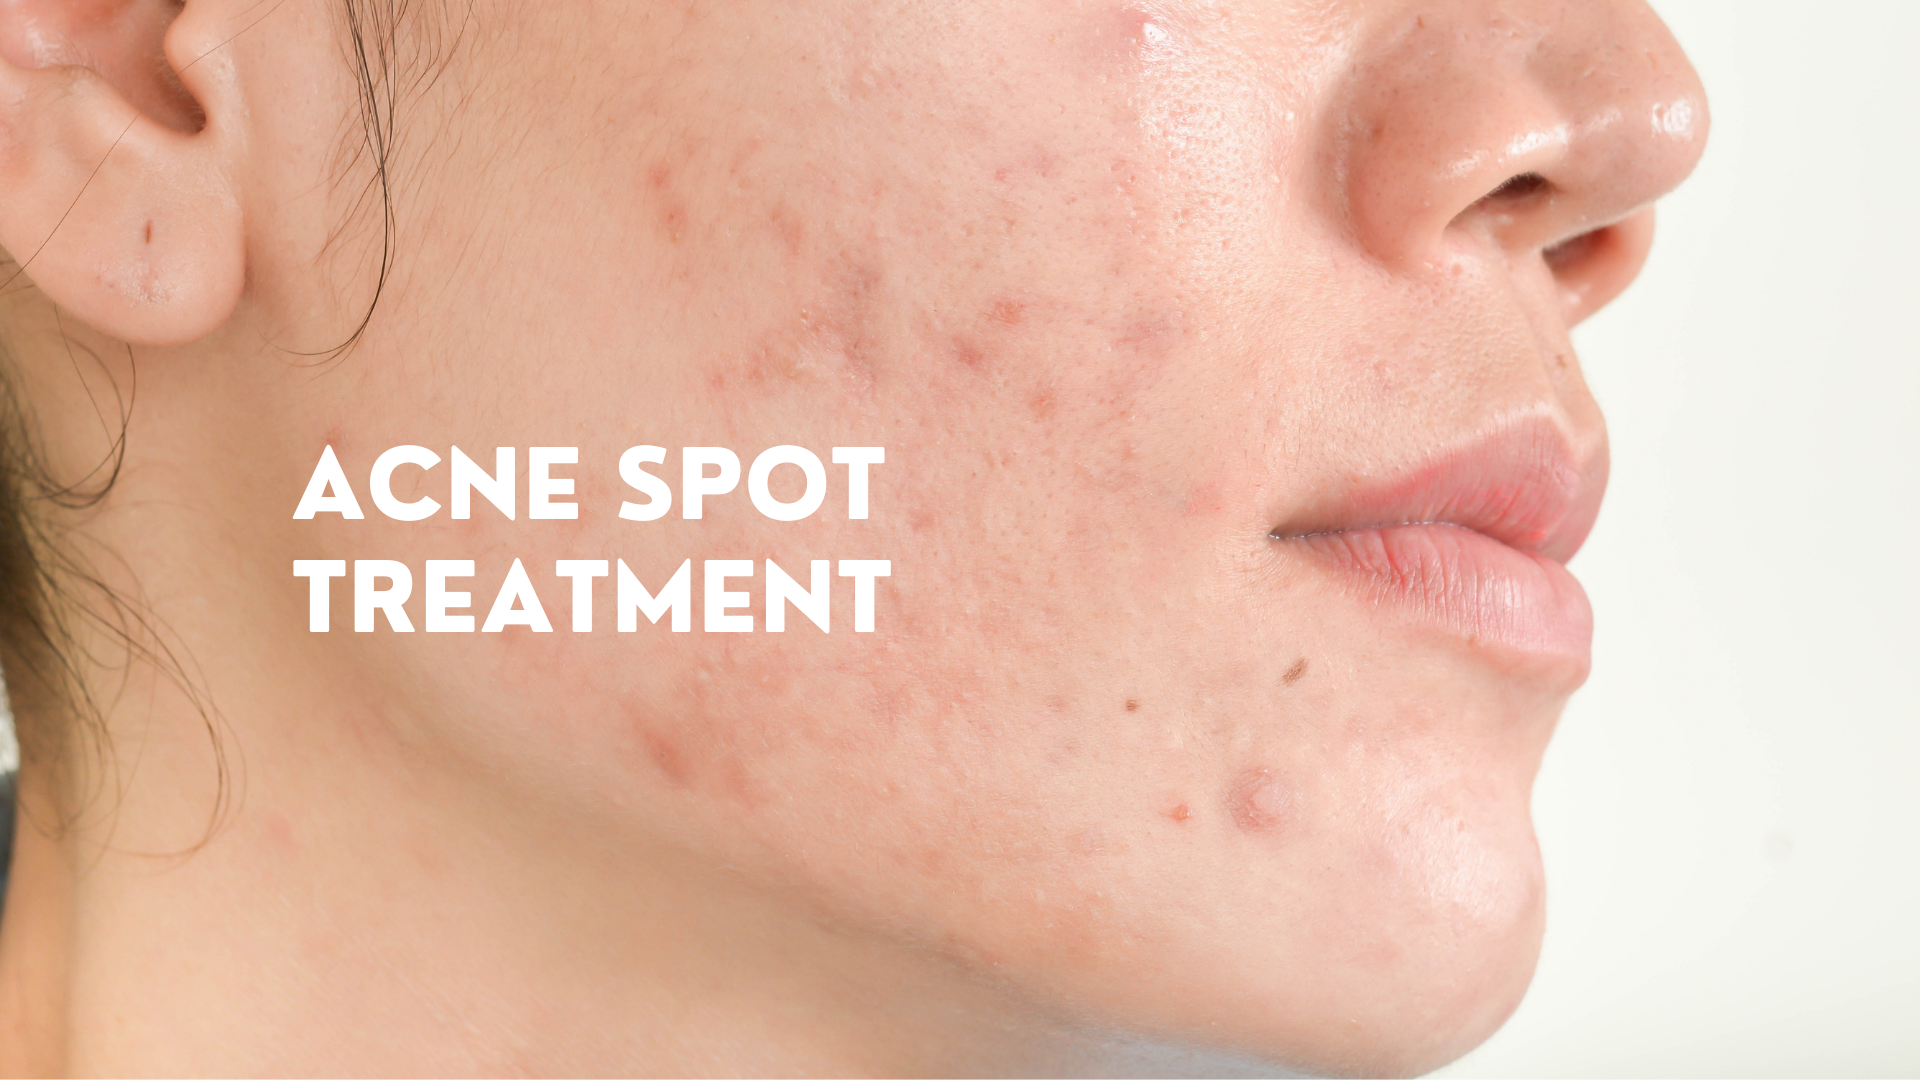 Acne spot treatment